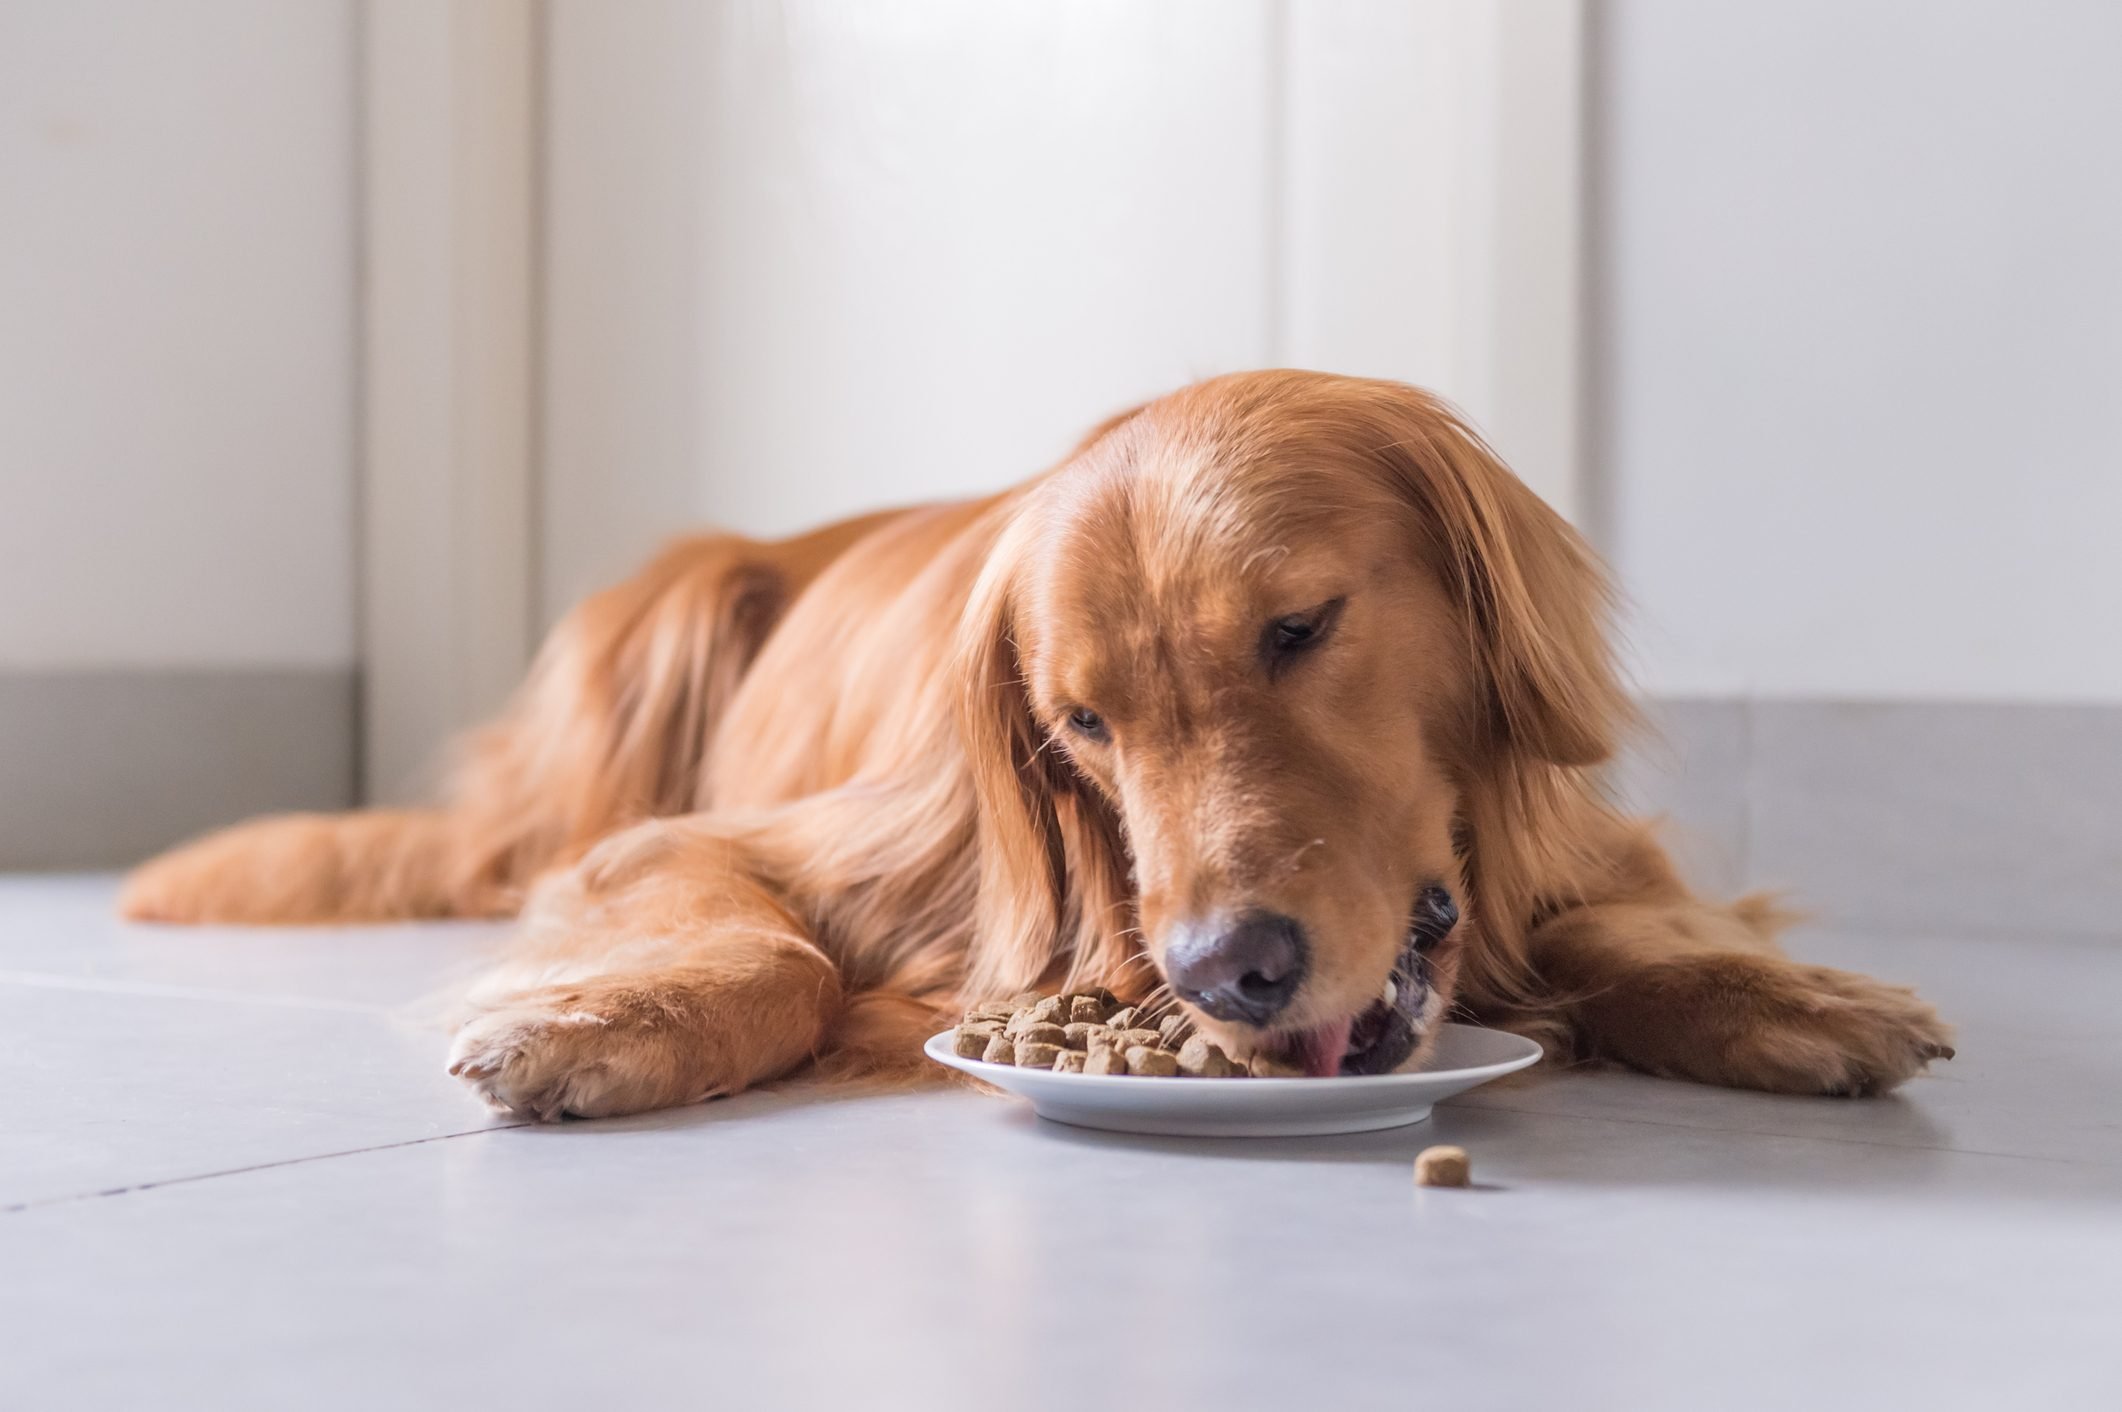 Best Dog Food Brands Vets Buy for Their Own Pets | Reader's Digest